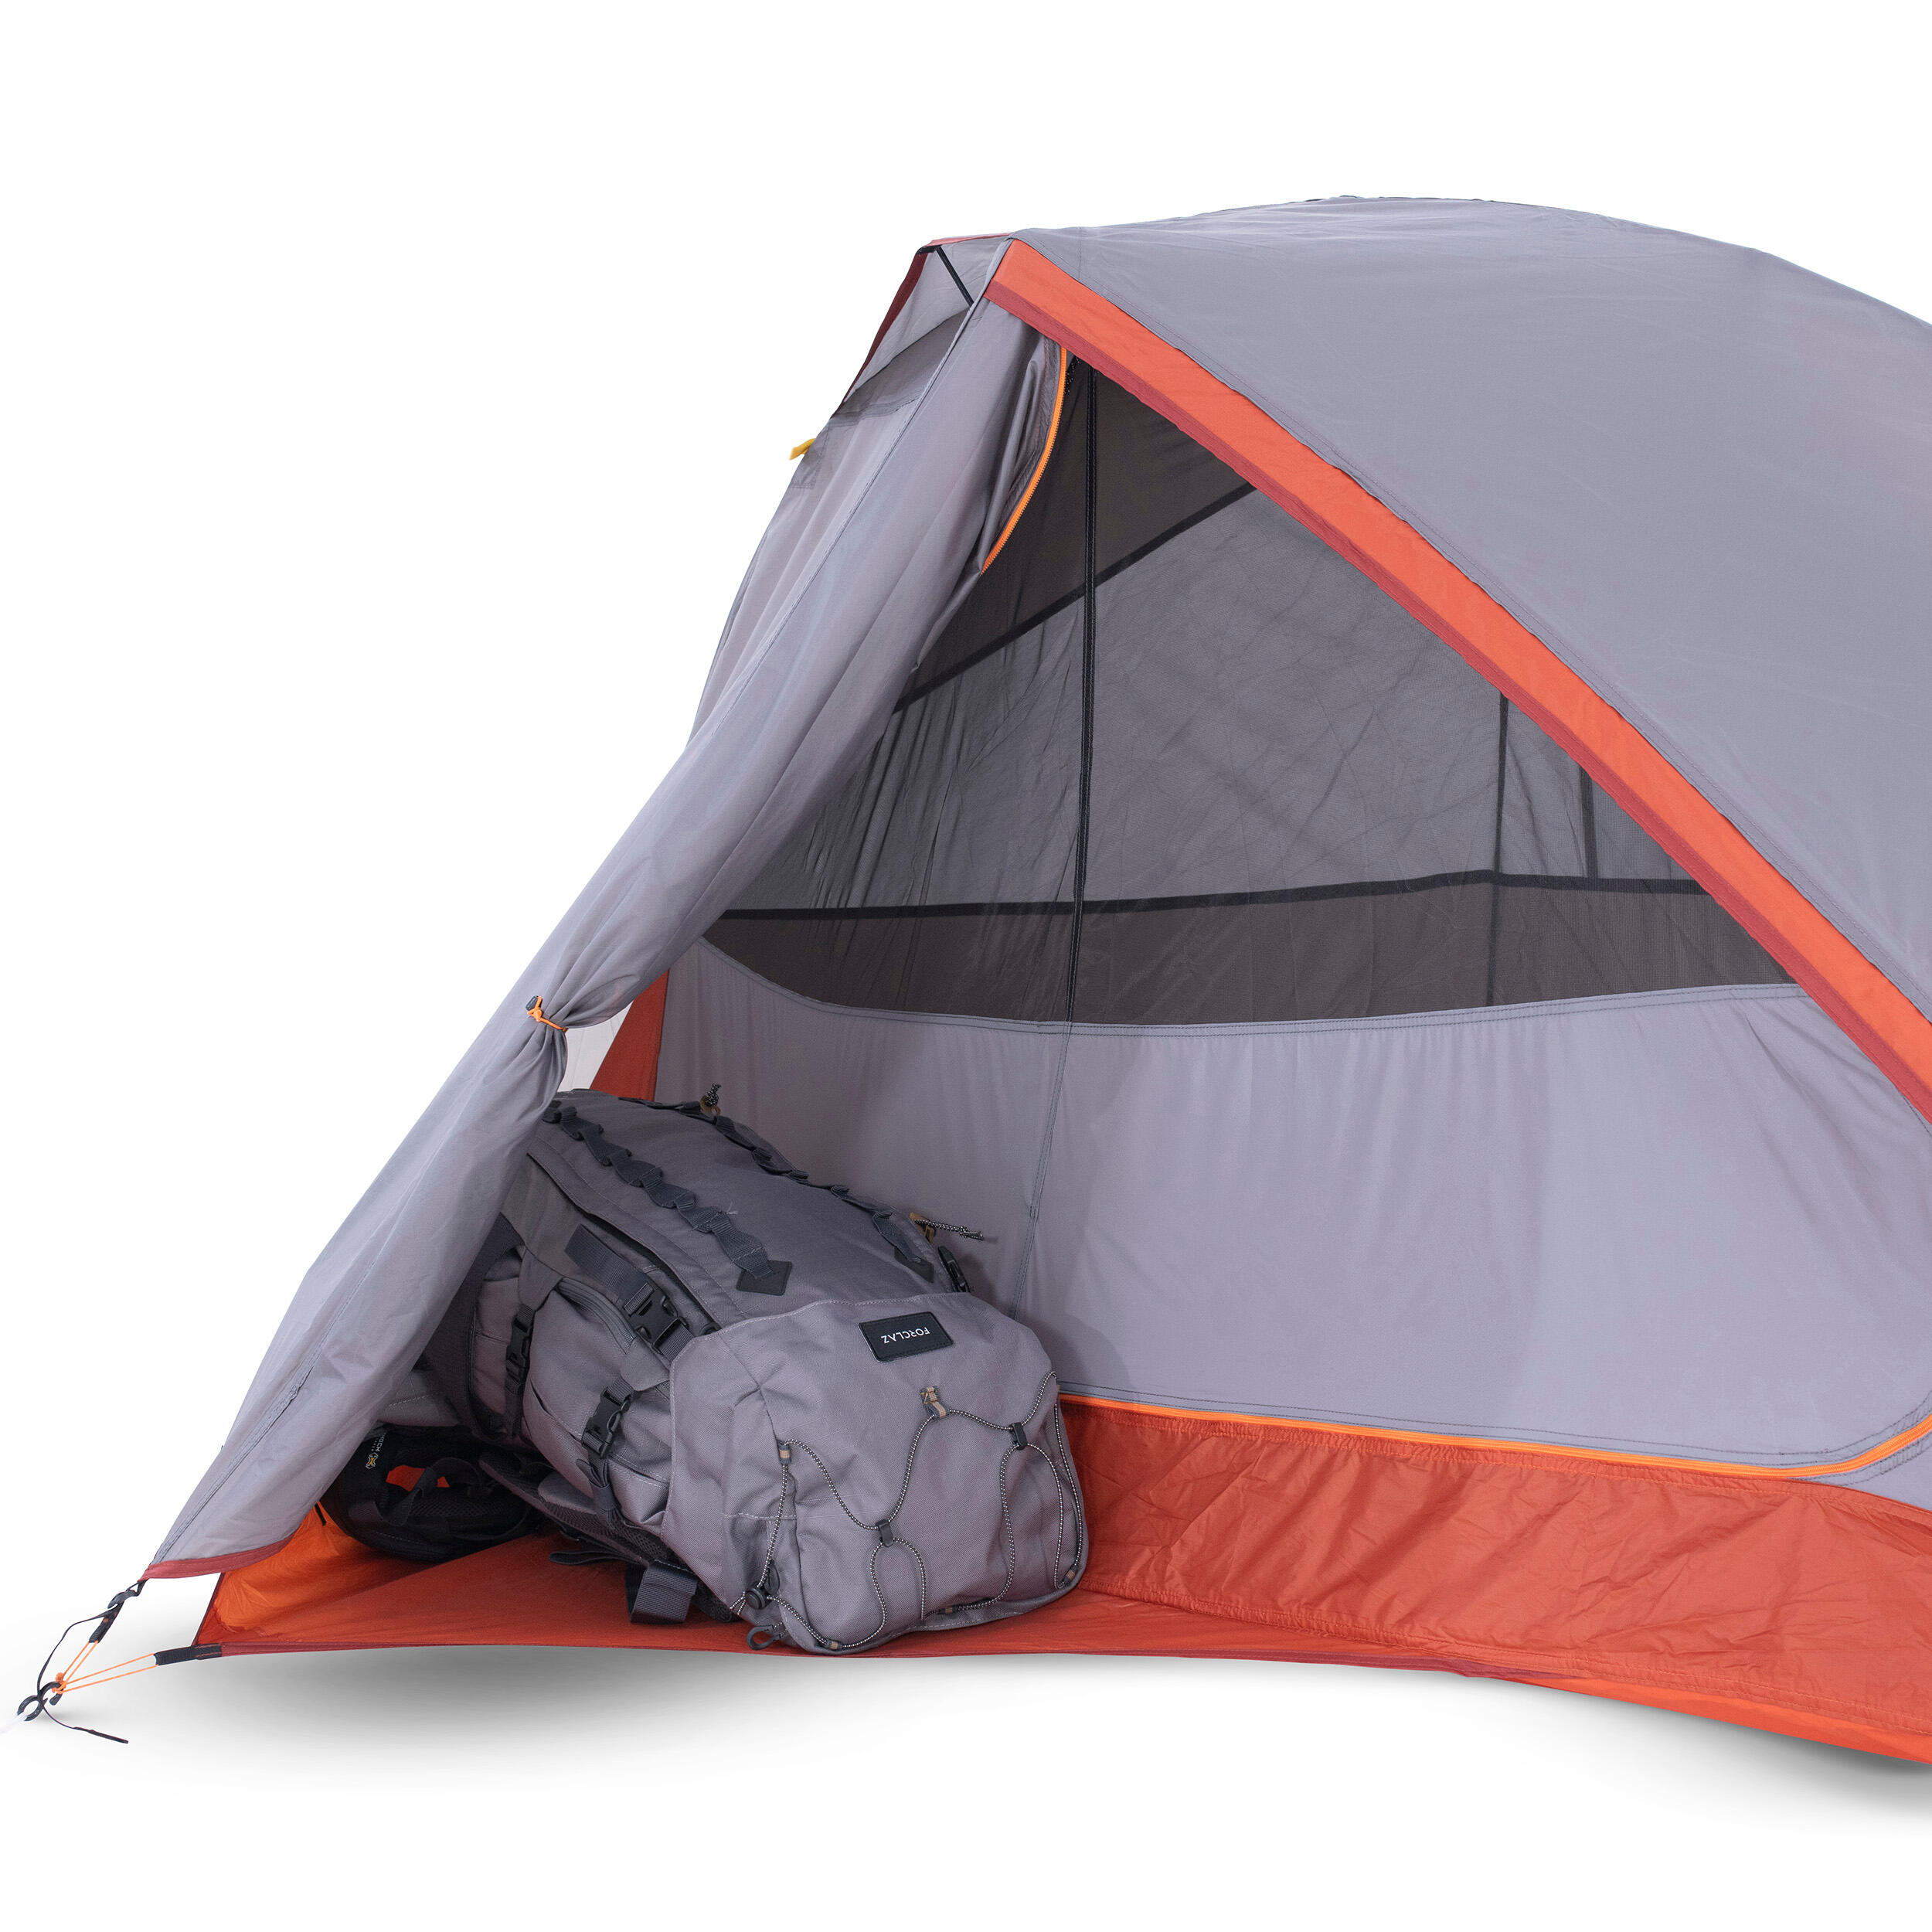 Trekking dome tent - 1-person - MT900 7/16